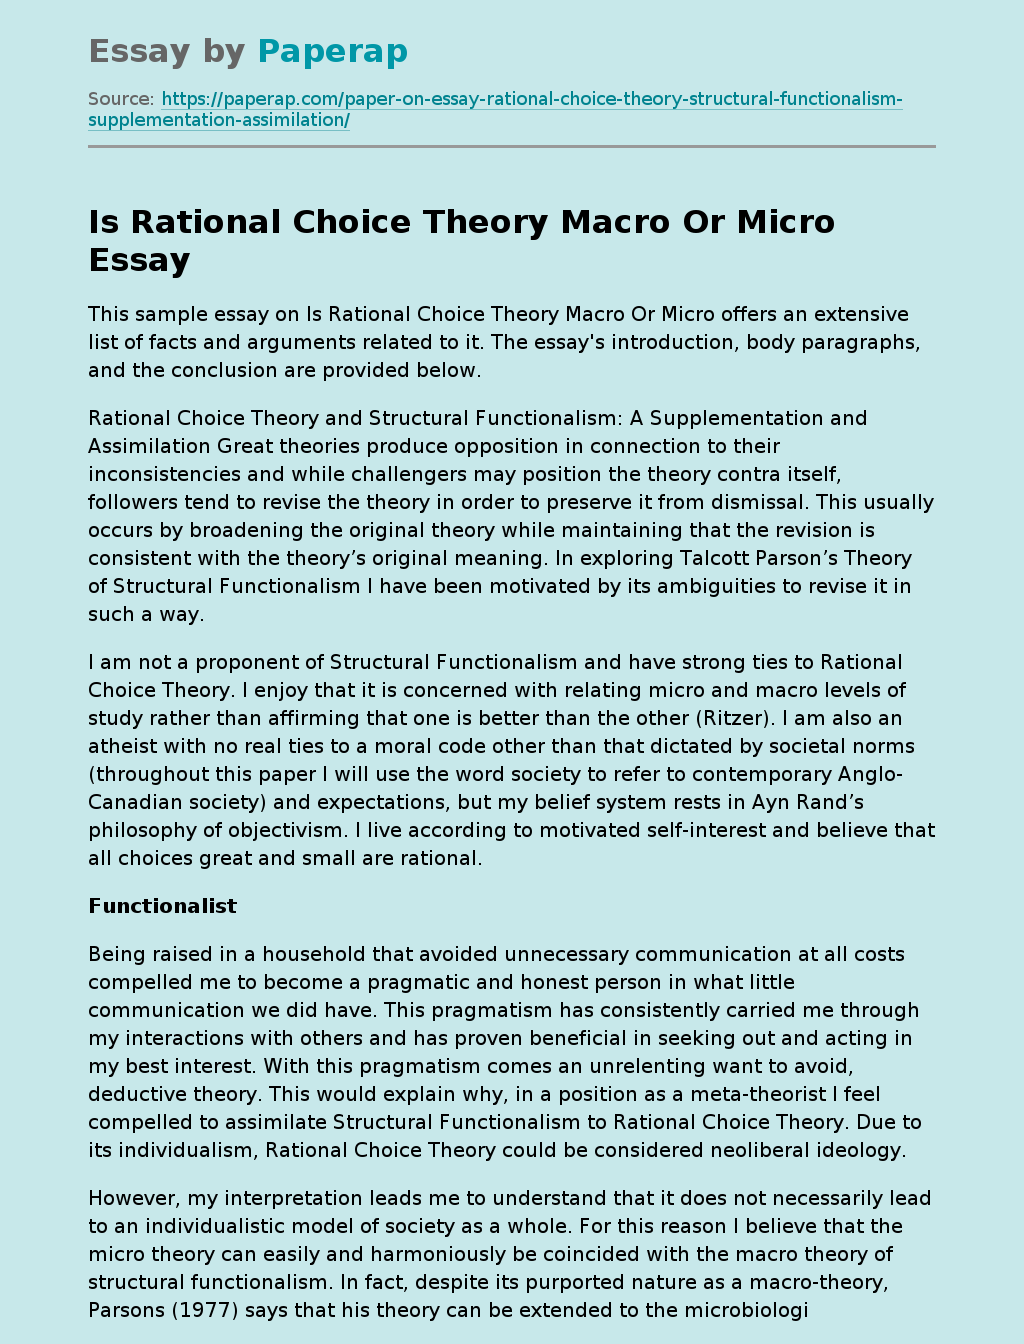 Is Rational Choice Theory Macro Or Micro